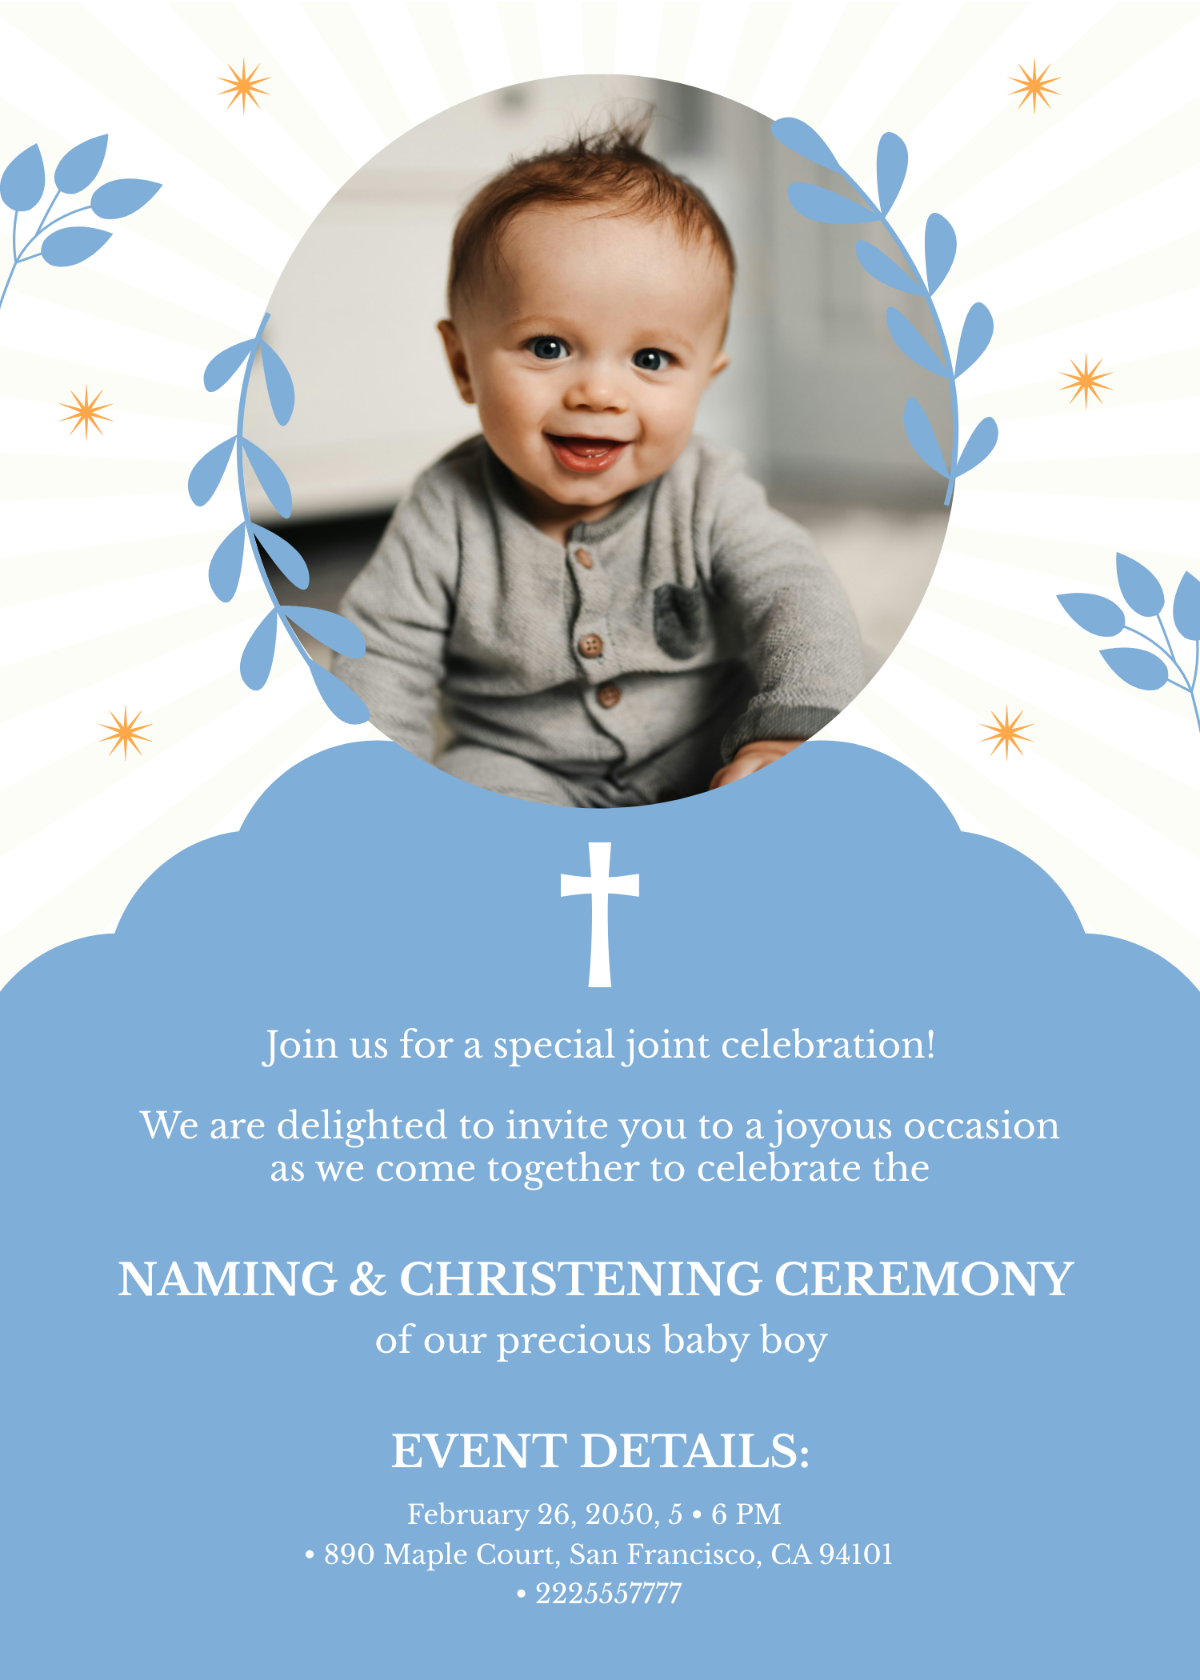 Naming Ceremony Invitation For Joint Celebrations